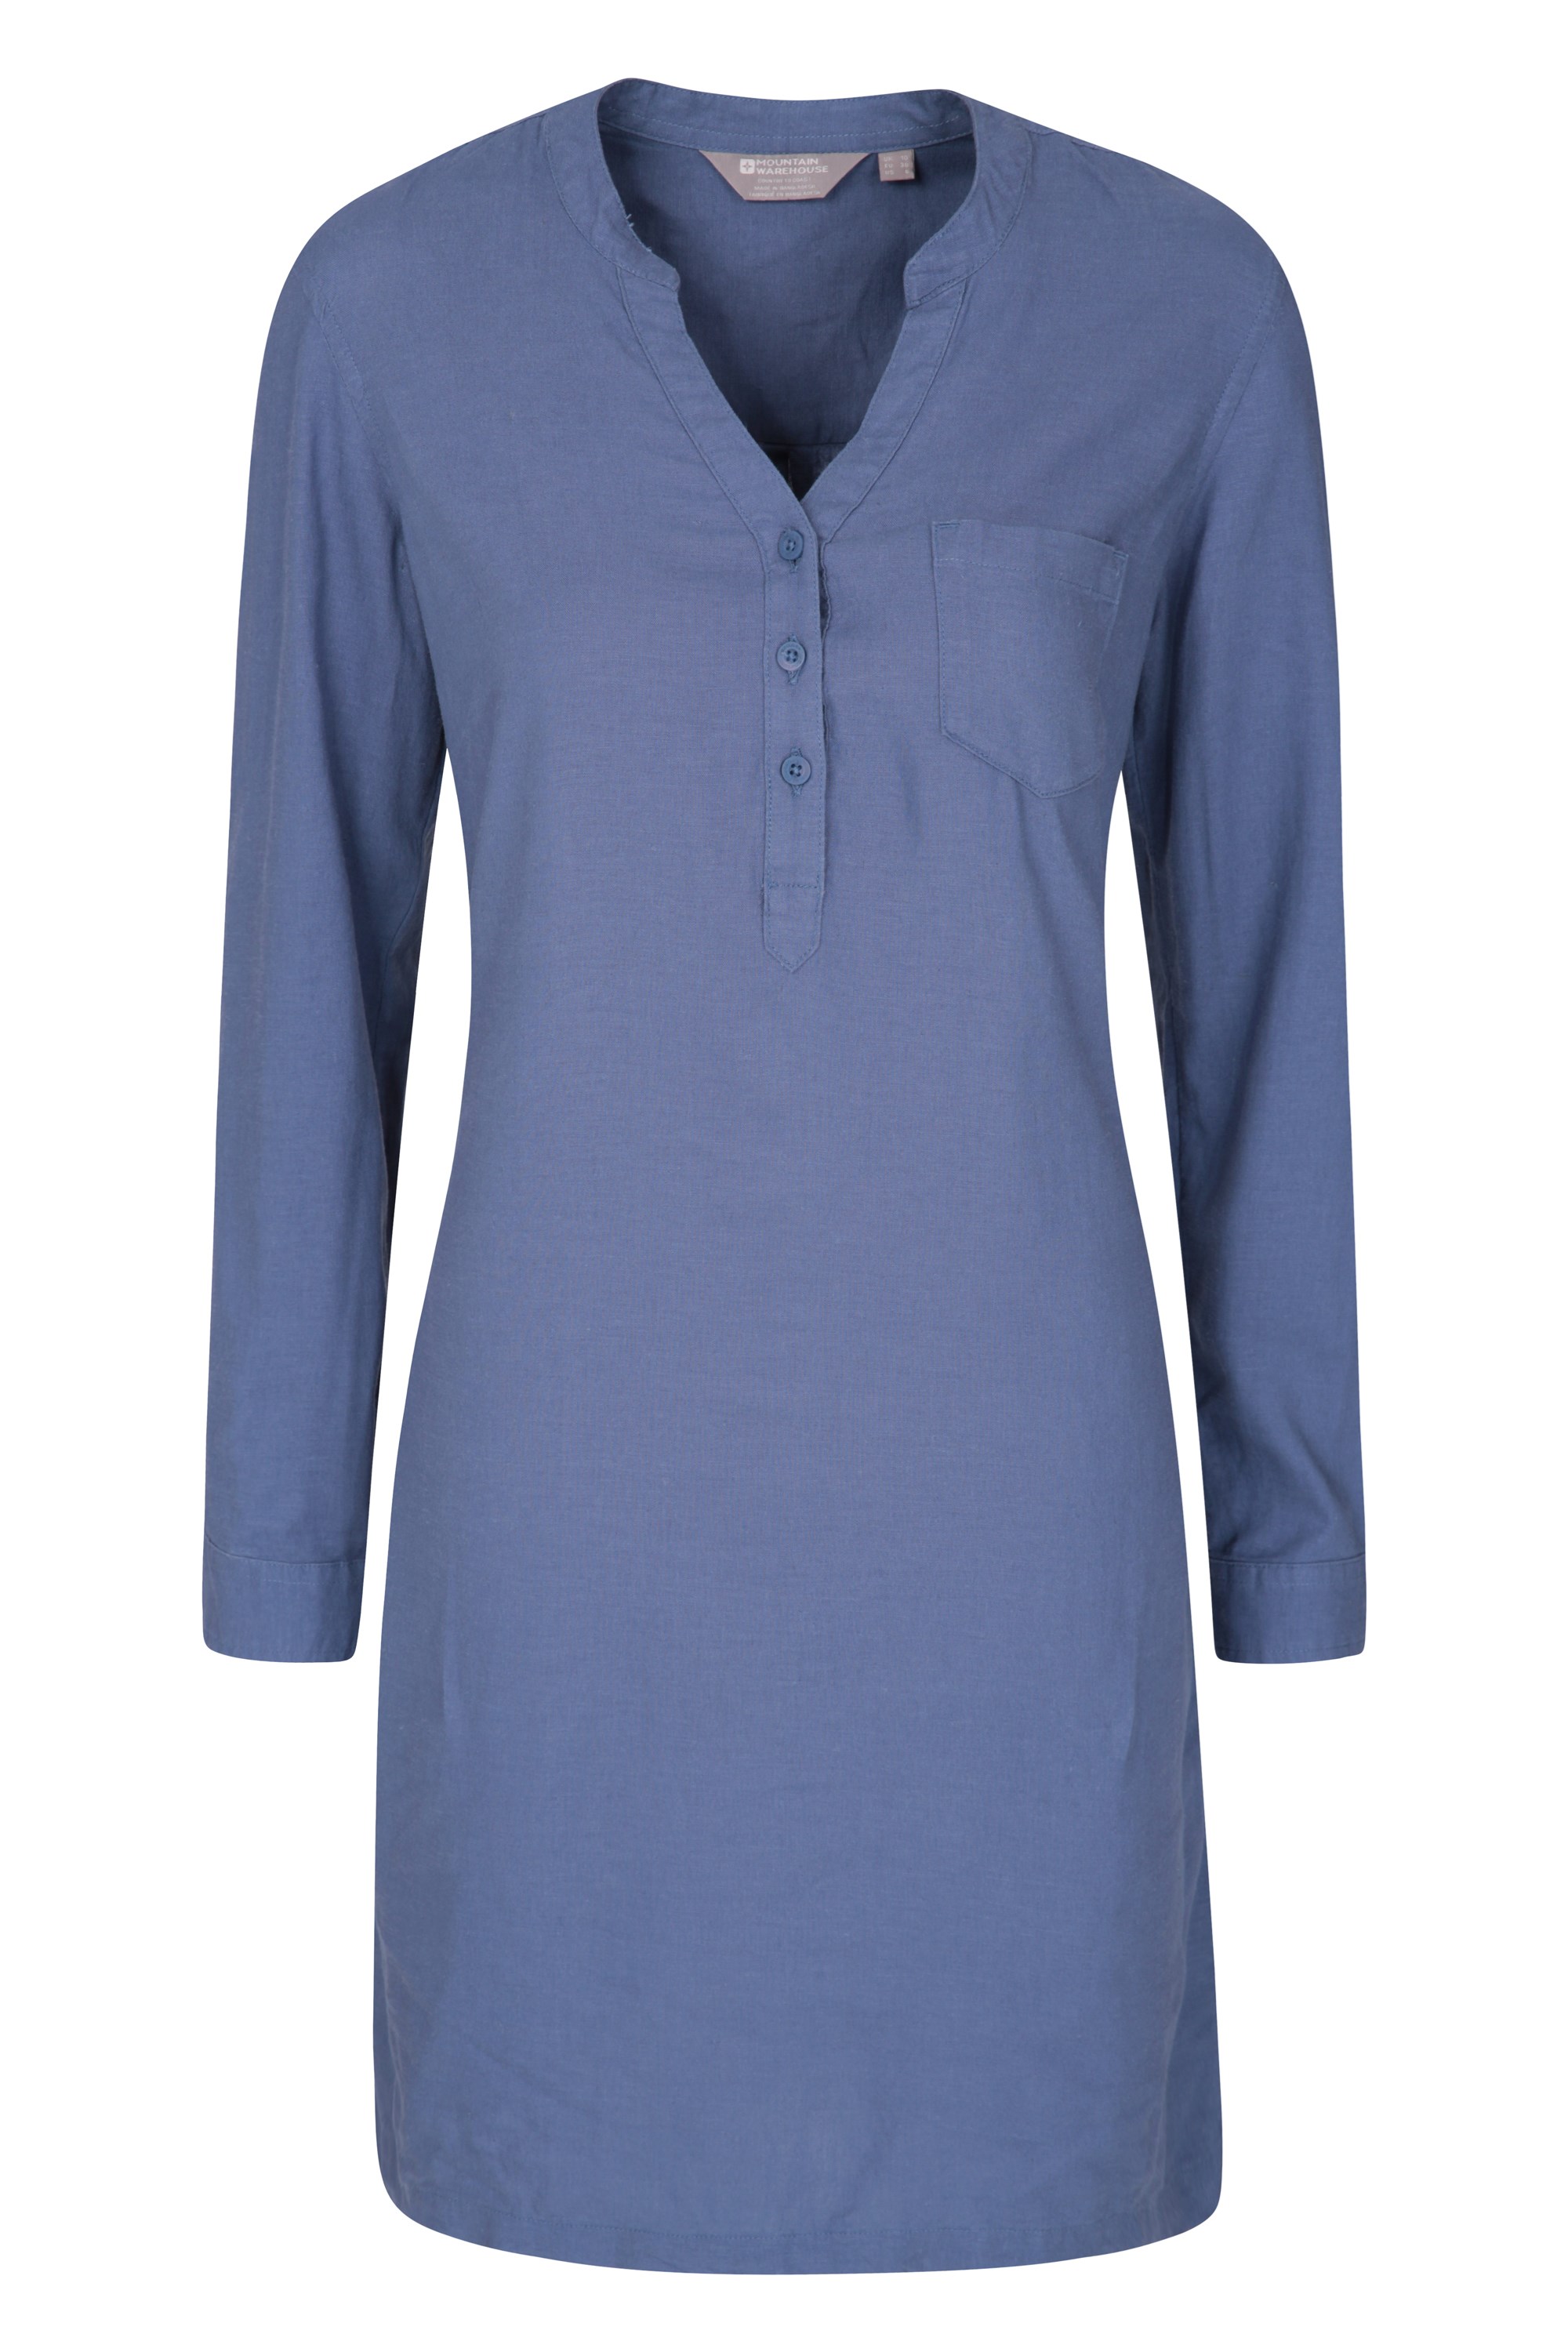 Mountain Warehouse Antigua Womens Shirt Dress Blue